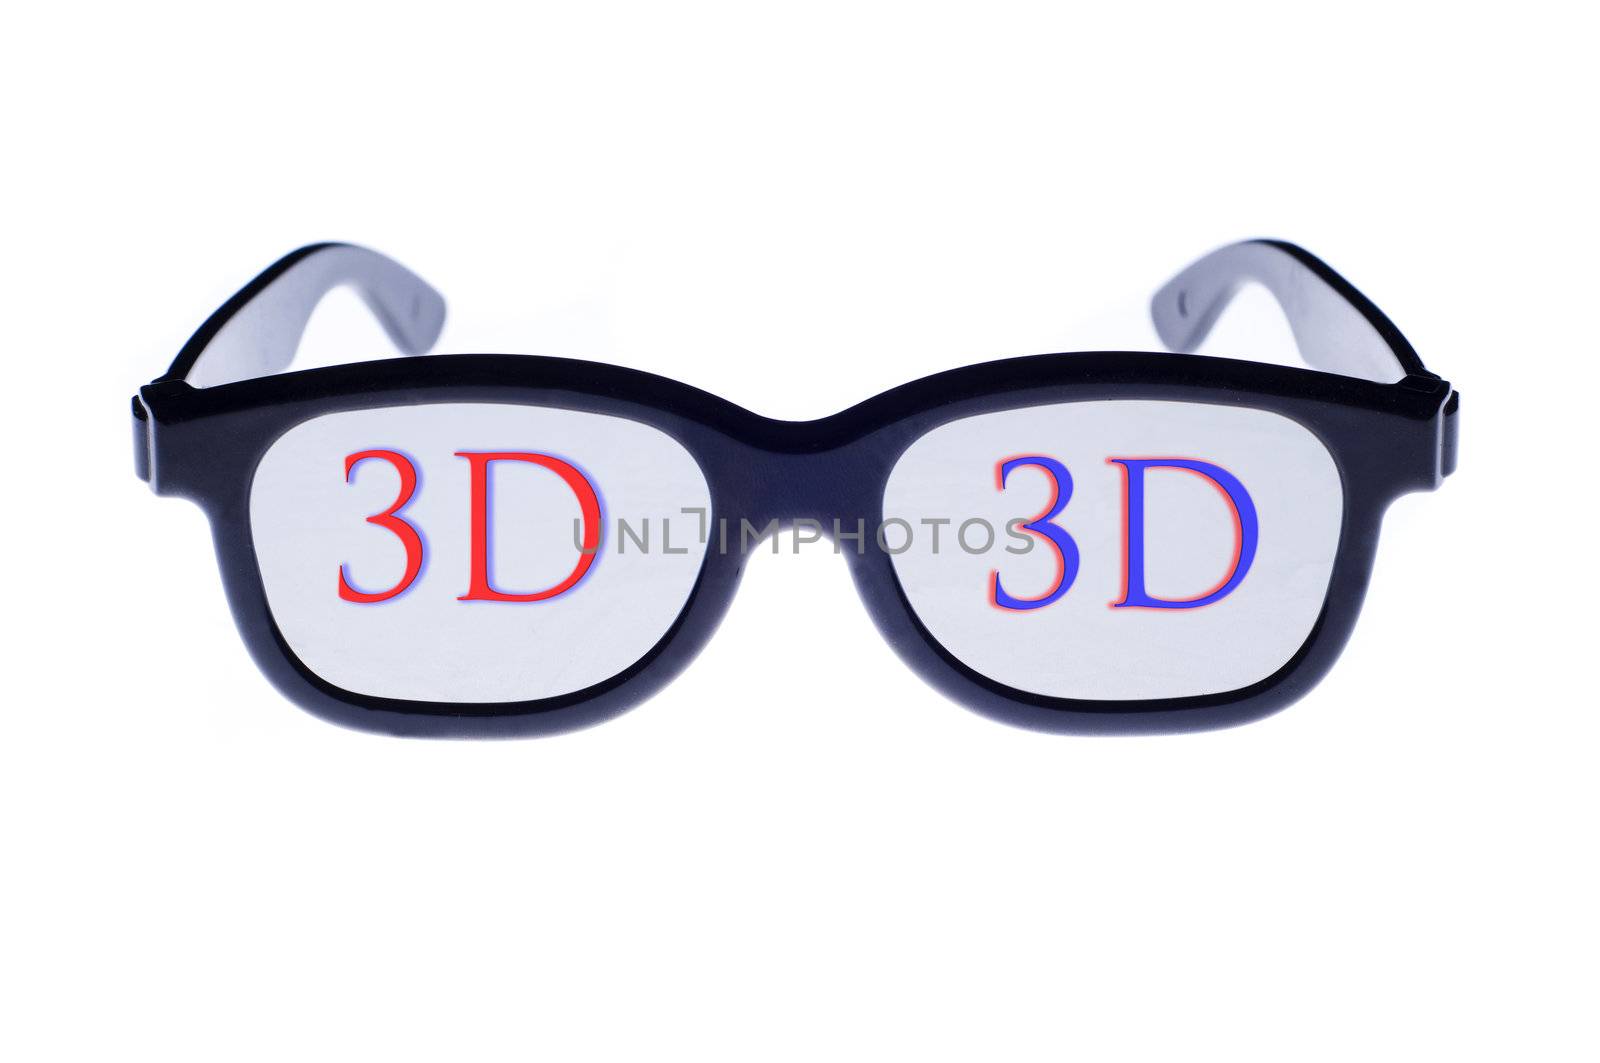 stylish 3d movie glasses shot on a white background